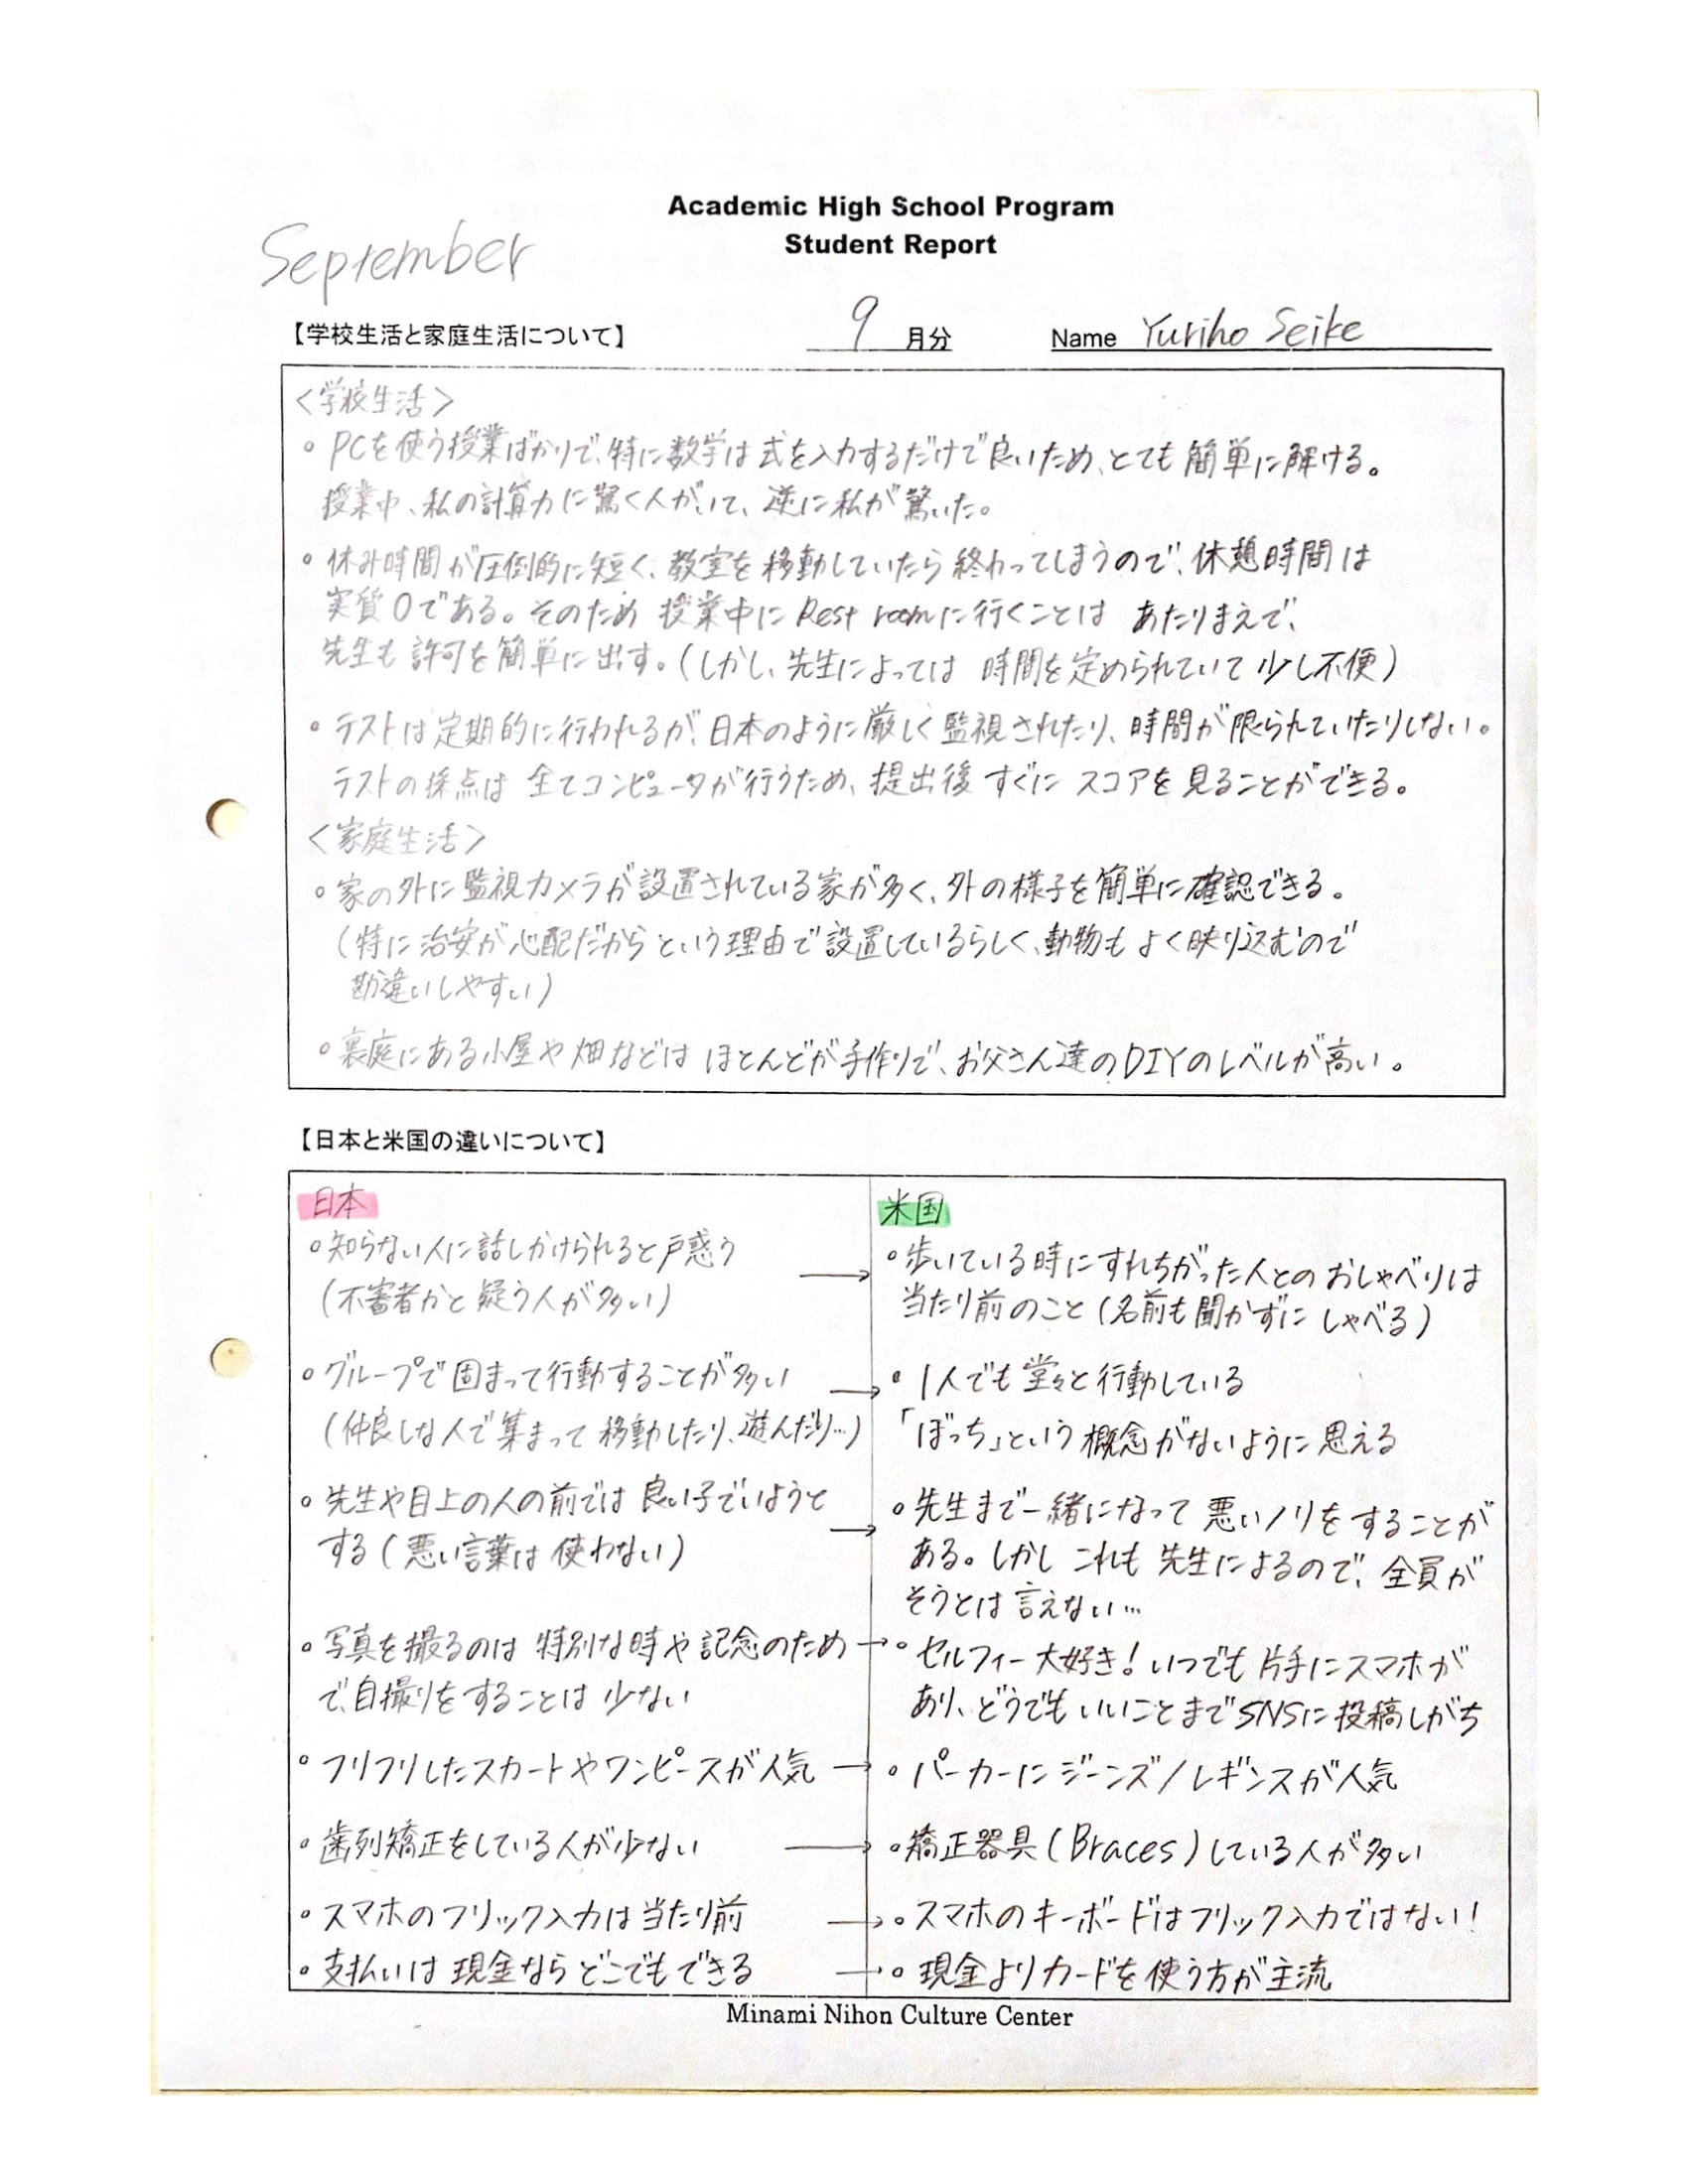 Yuriho's Student Report in September